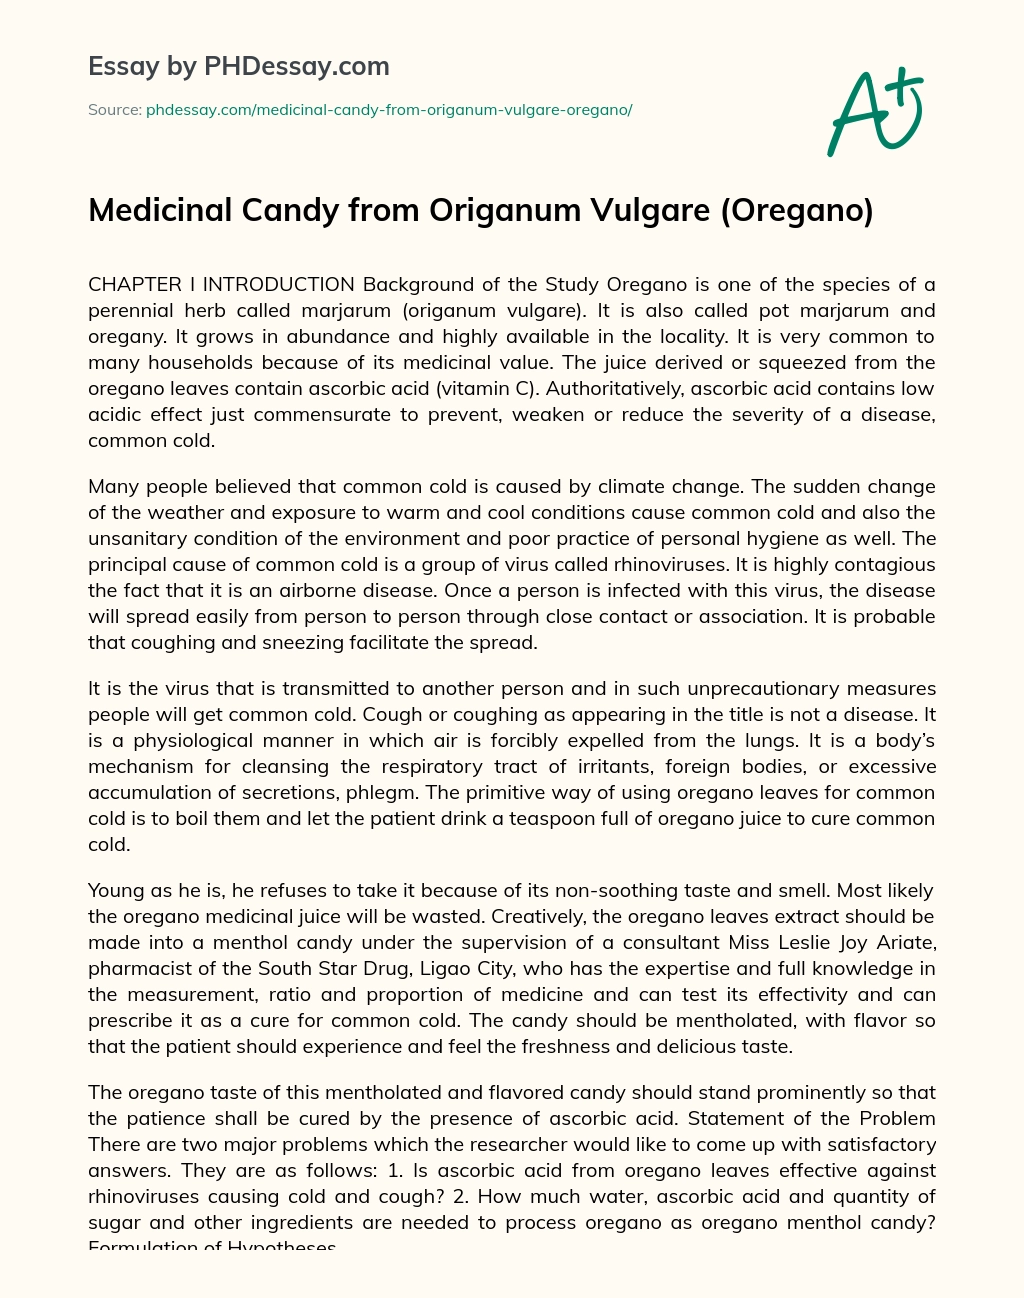 Medicinal Candy from Origanum Vulgare (Oregano) essay